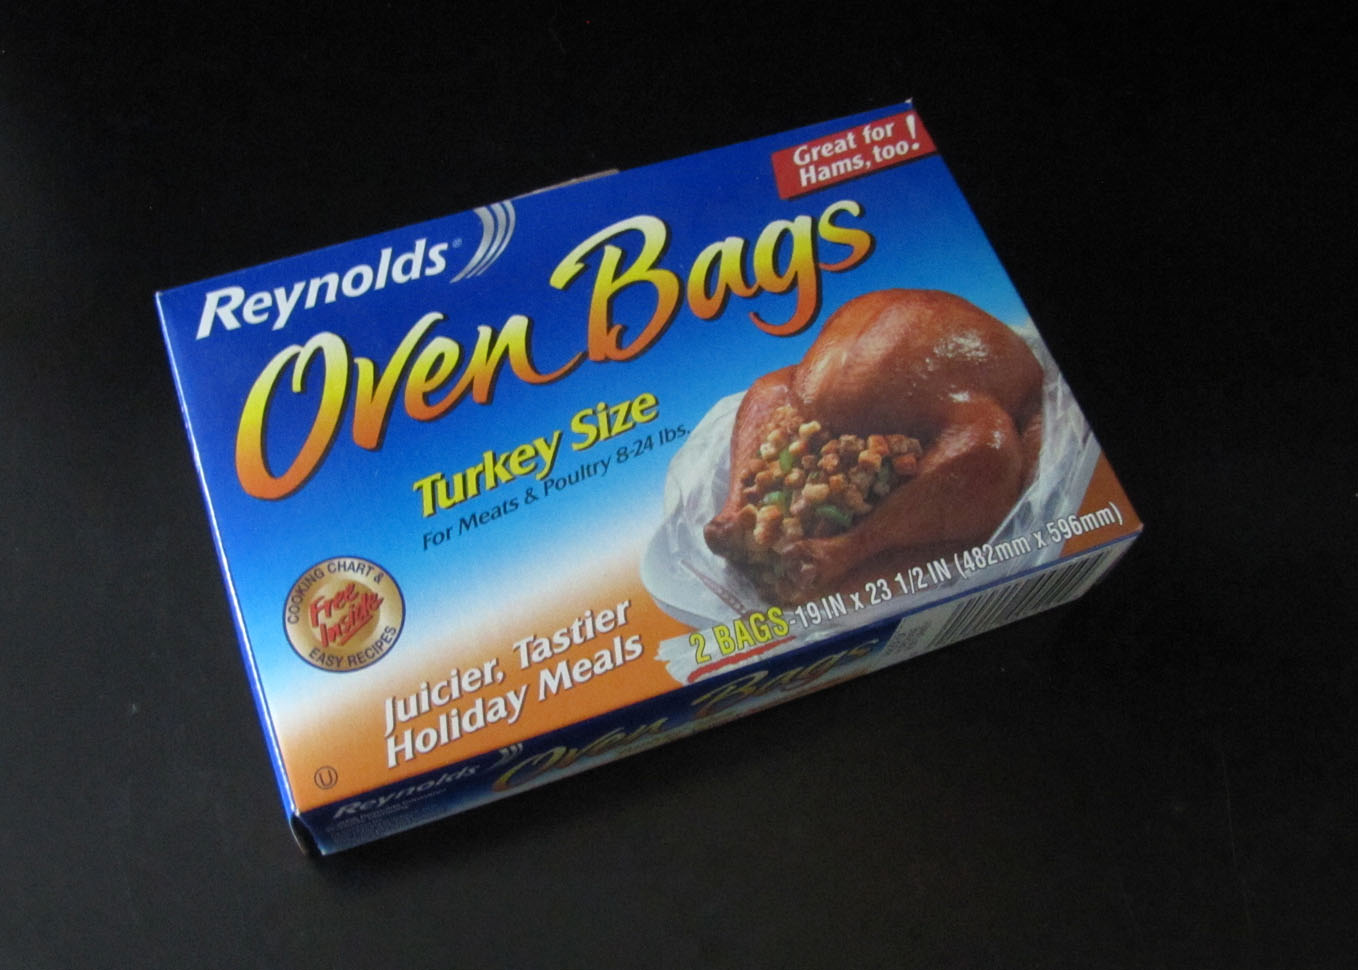 Easy Oven Bag Meals